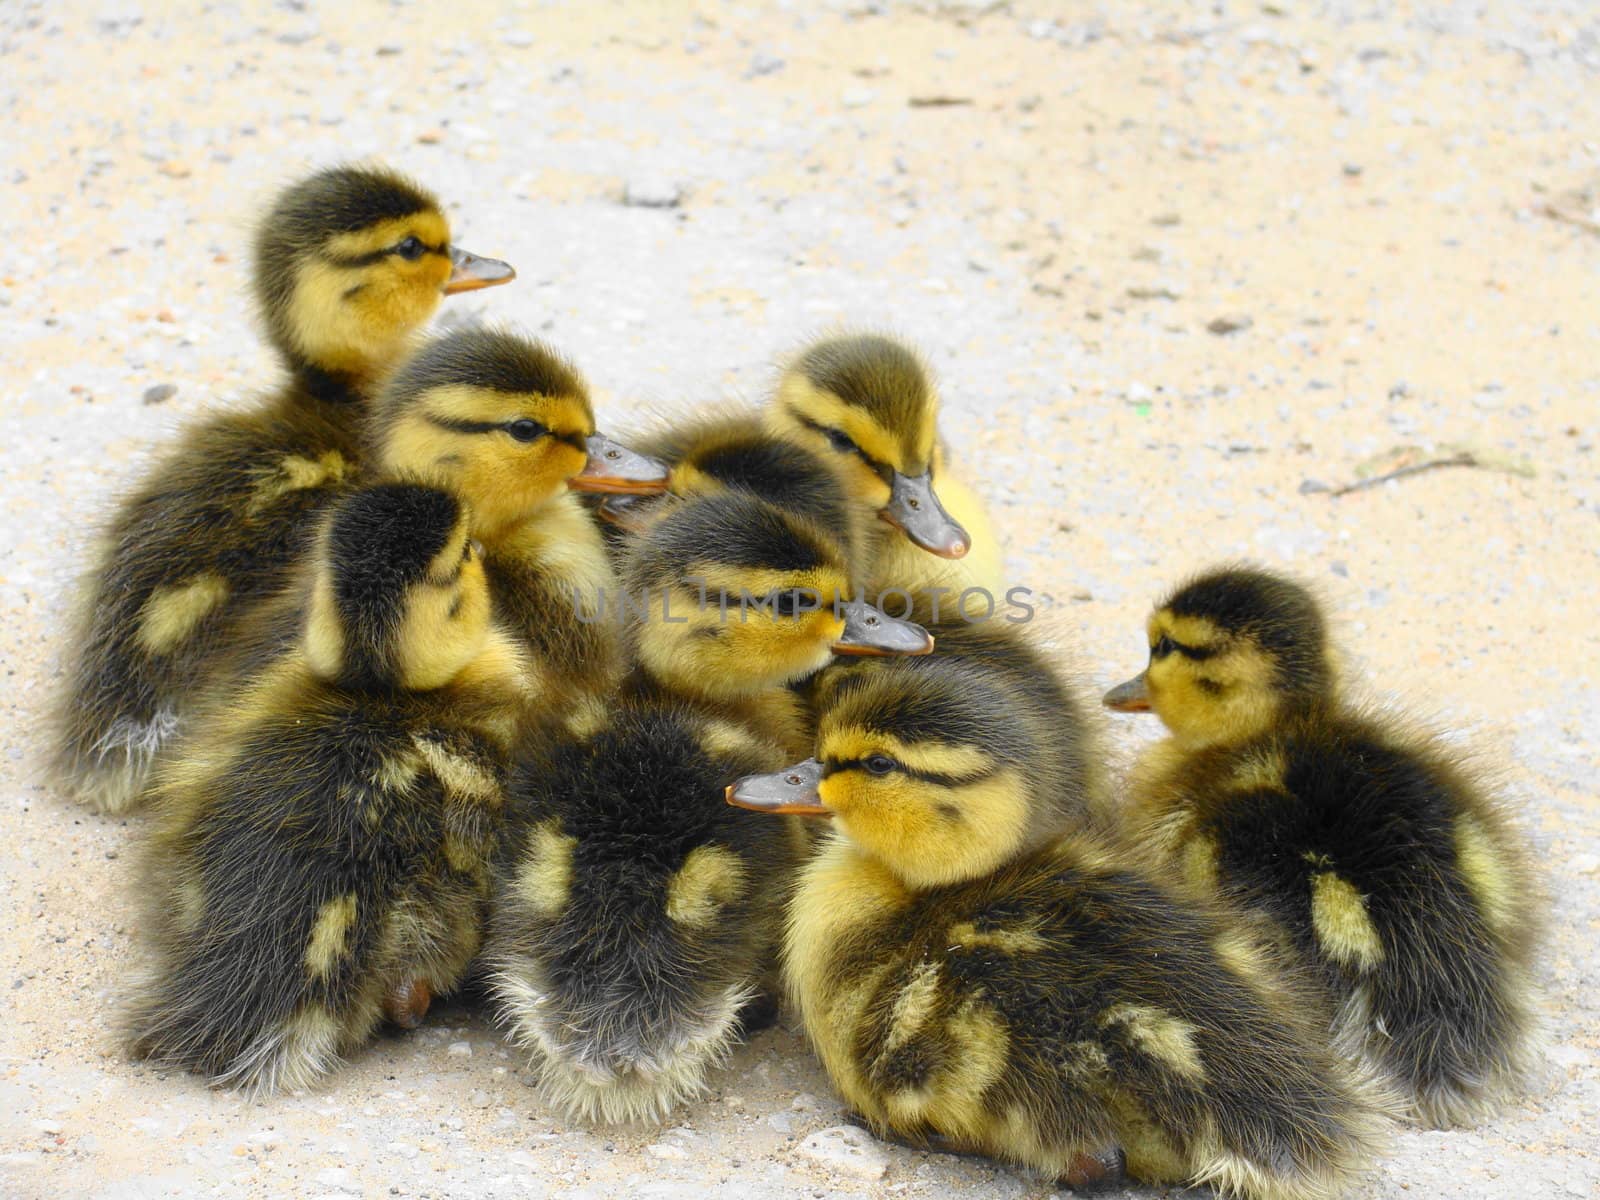 Ducklings by koletvinov